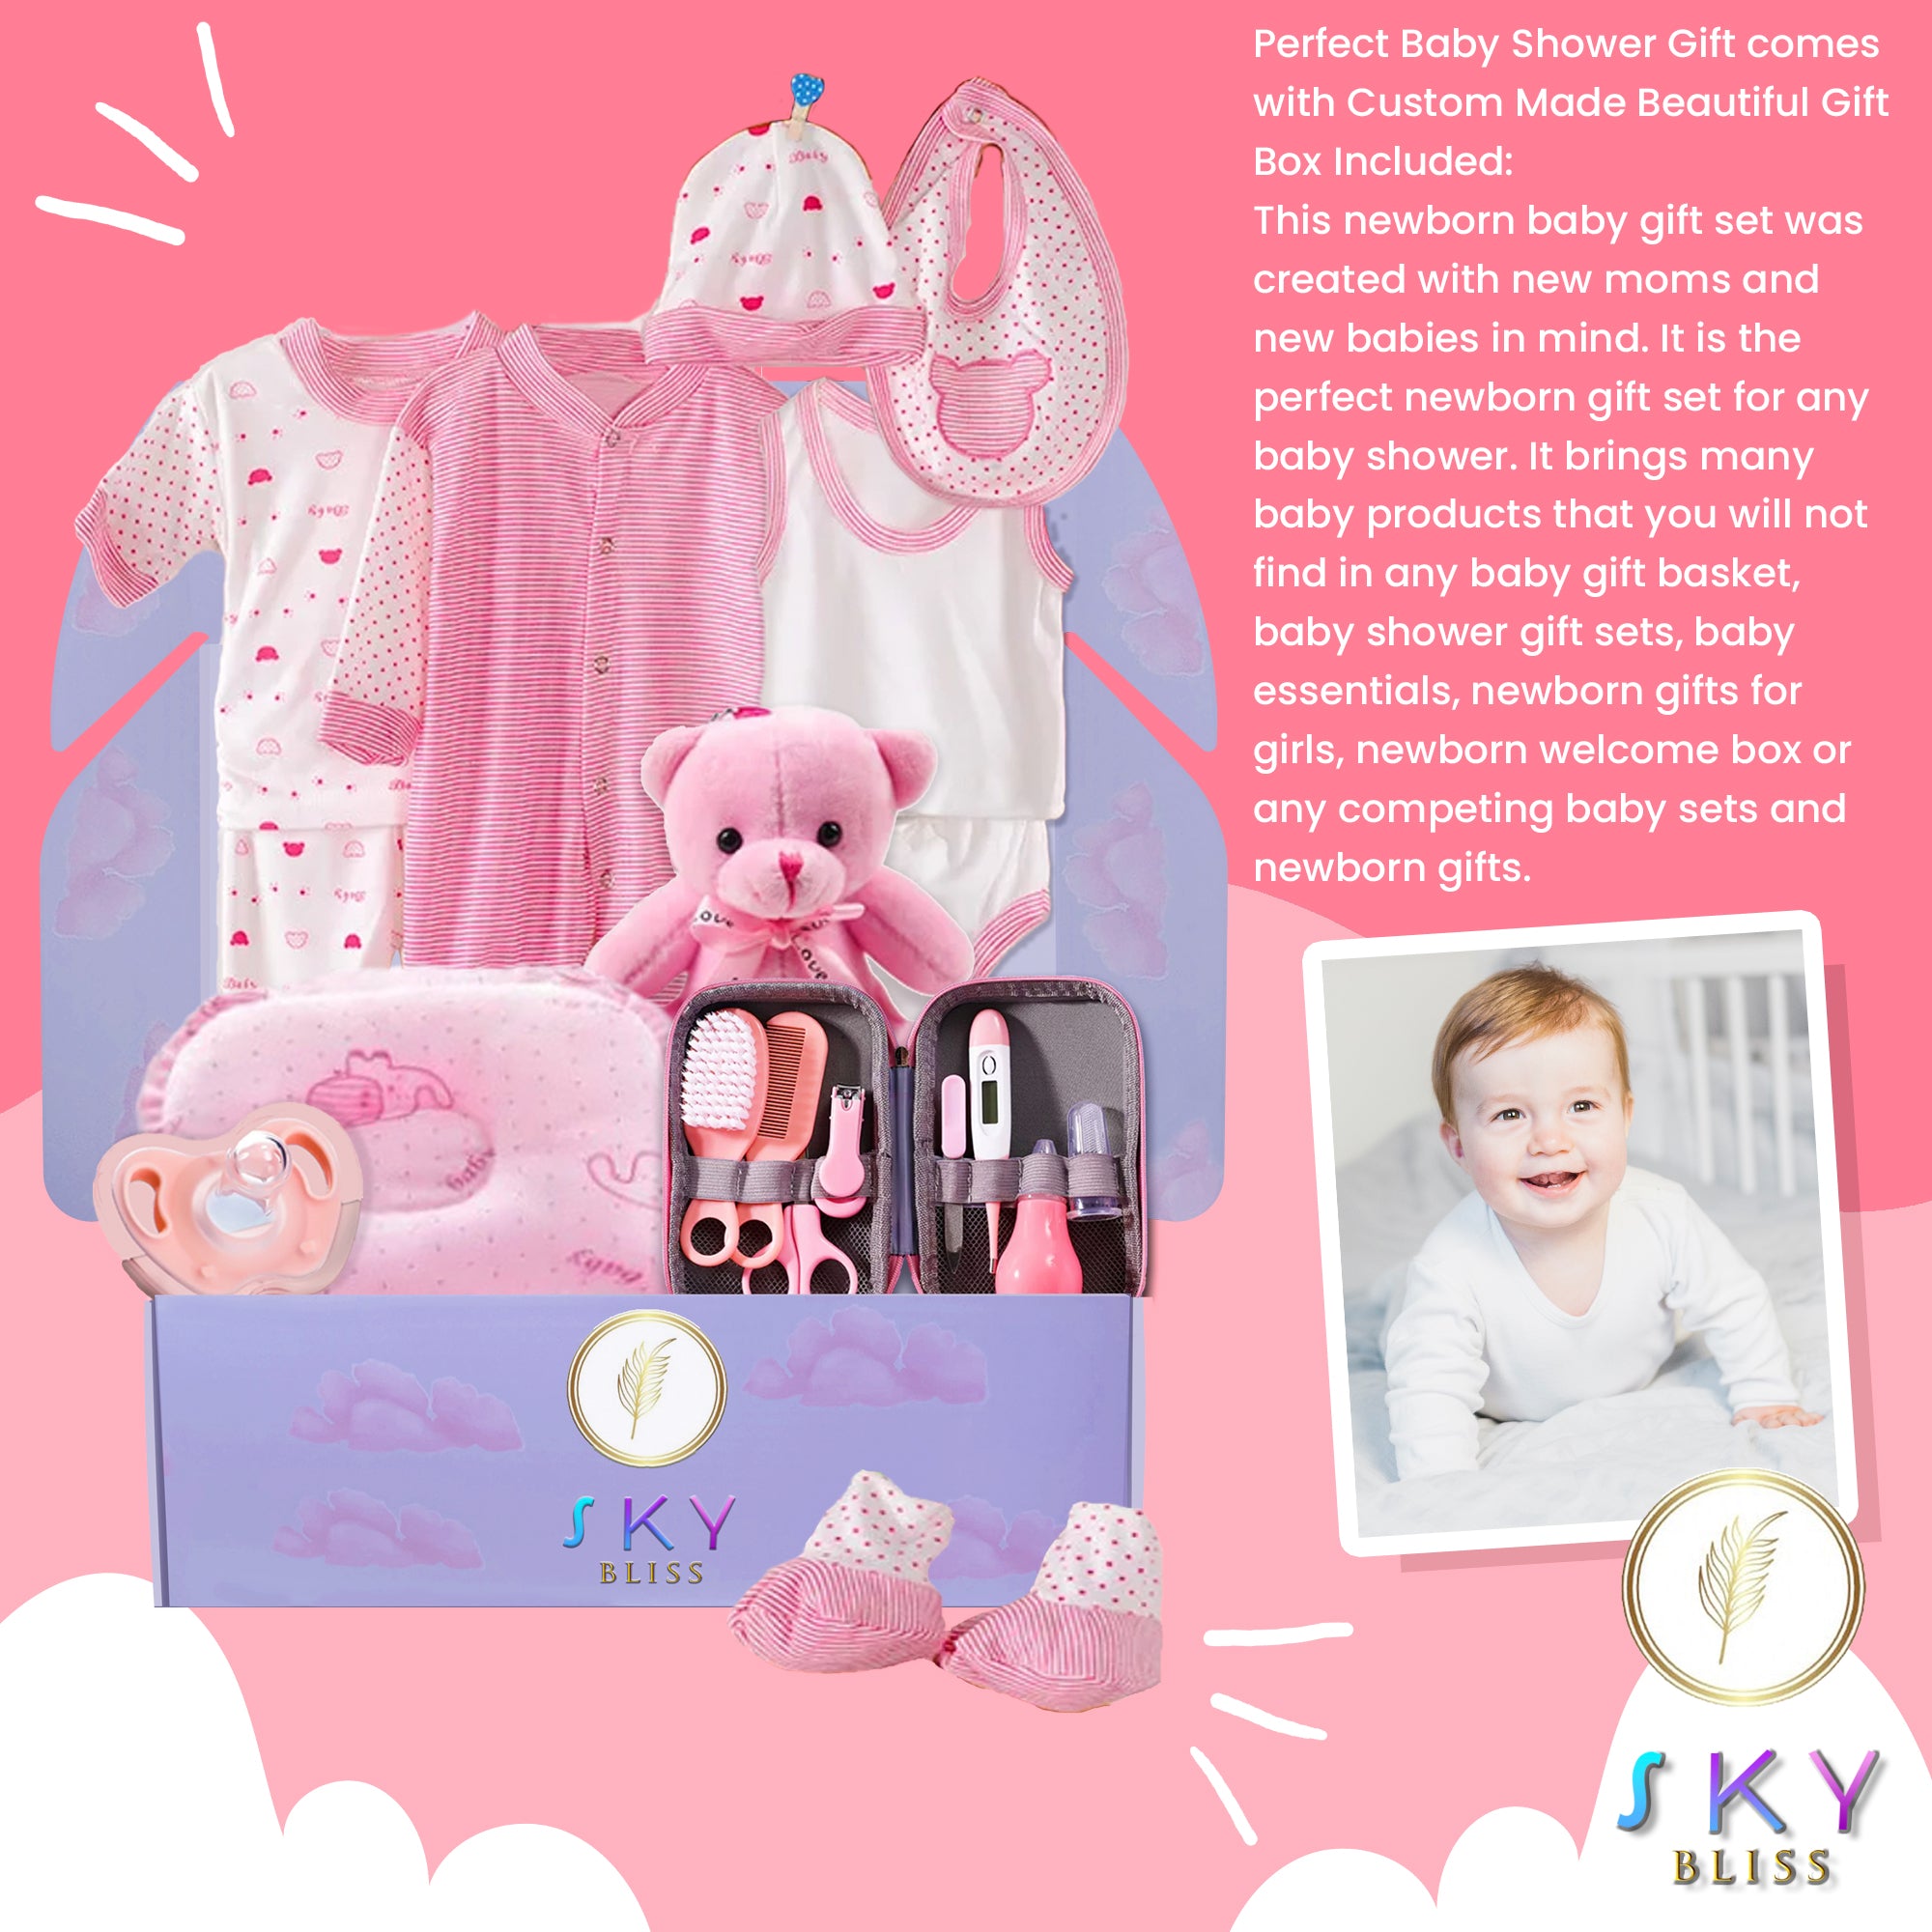 Sky Bliss Baby Gift Box